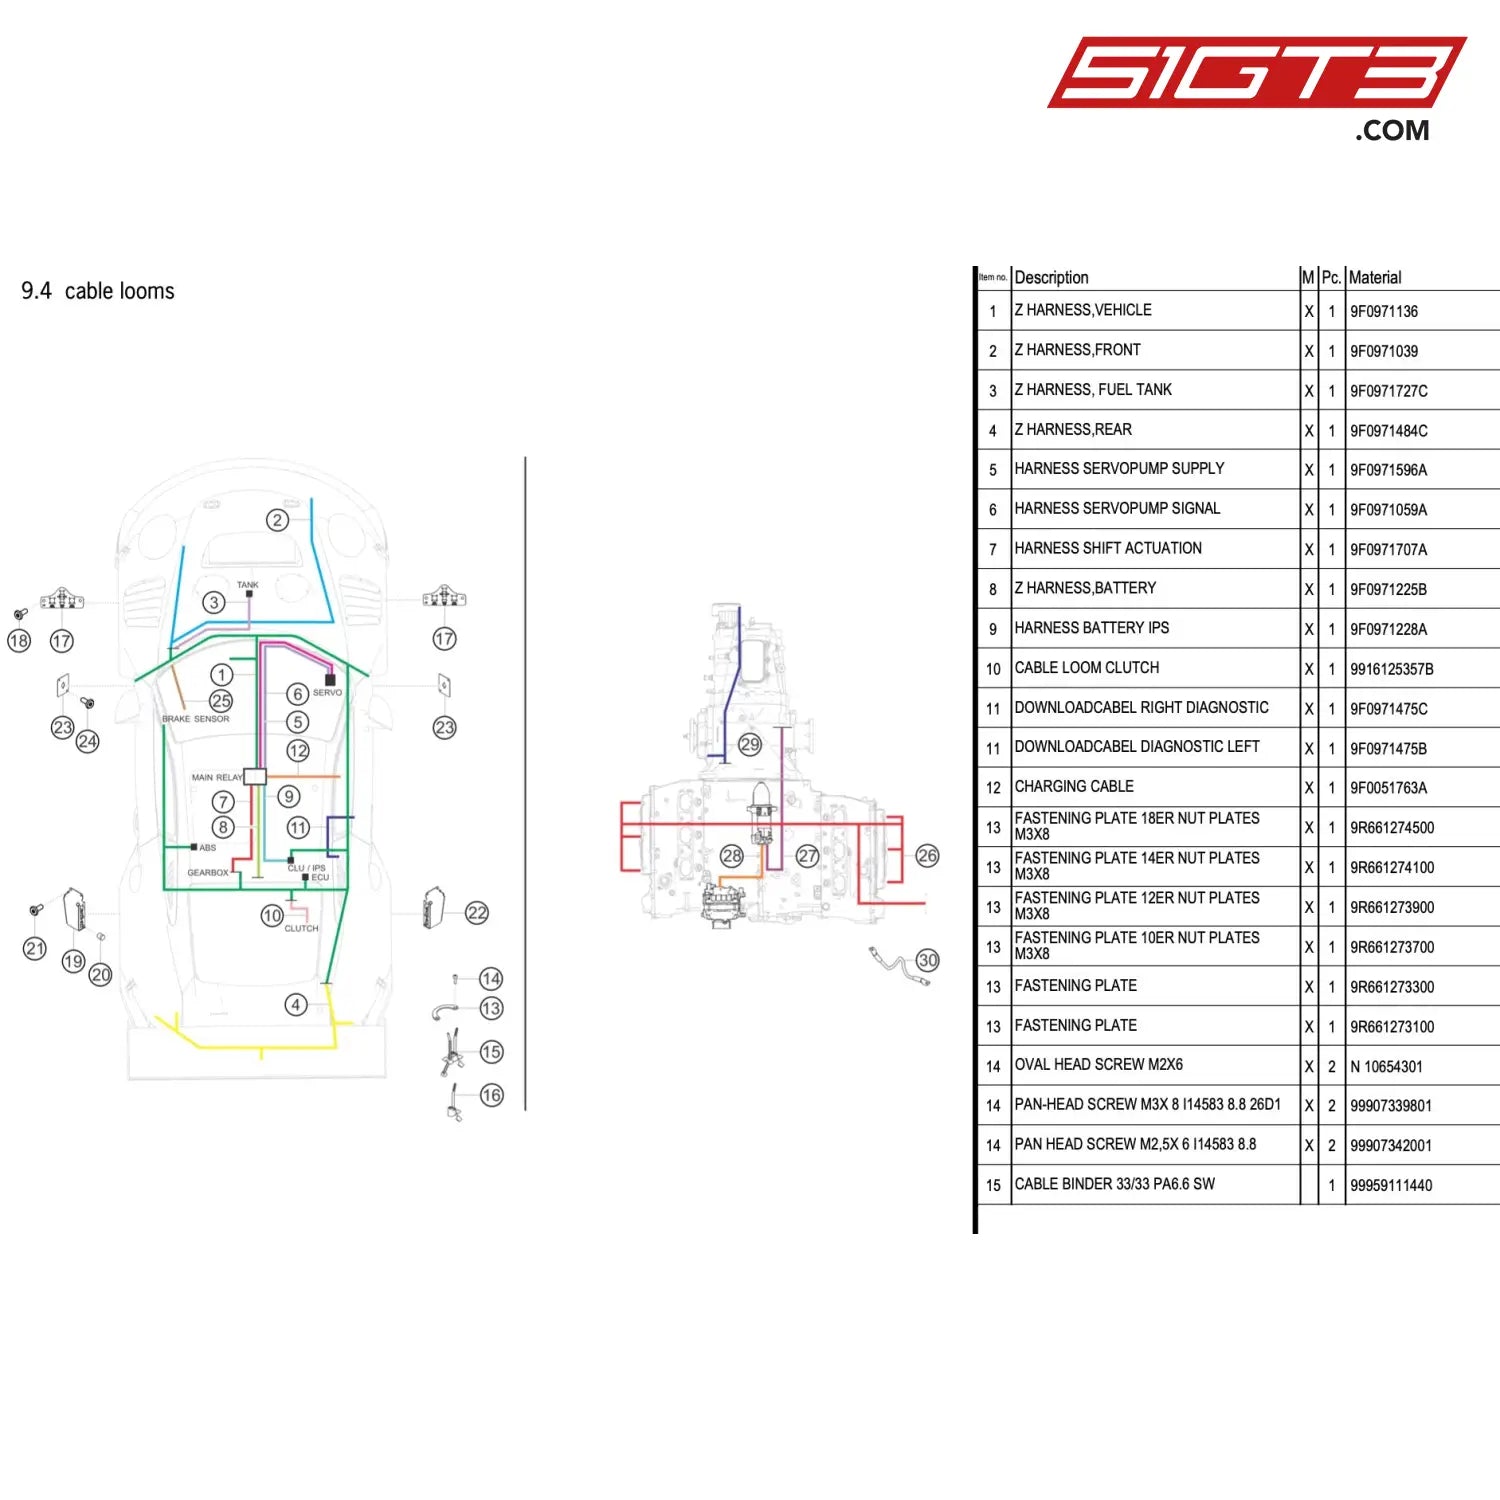 Fastening Plate 12Er Nut Plates M3X8 - 9R661273900 [Porsche 911 Gt3 R Type 991 (Gen 2)] Cable Looms